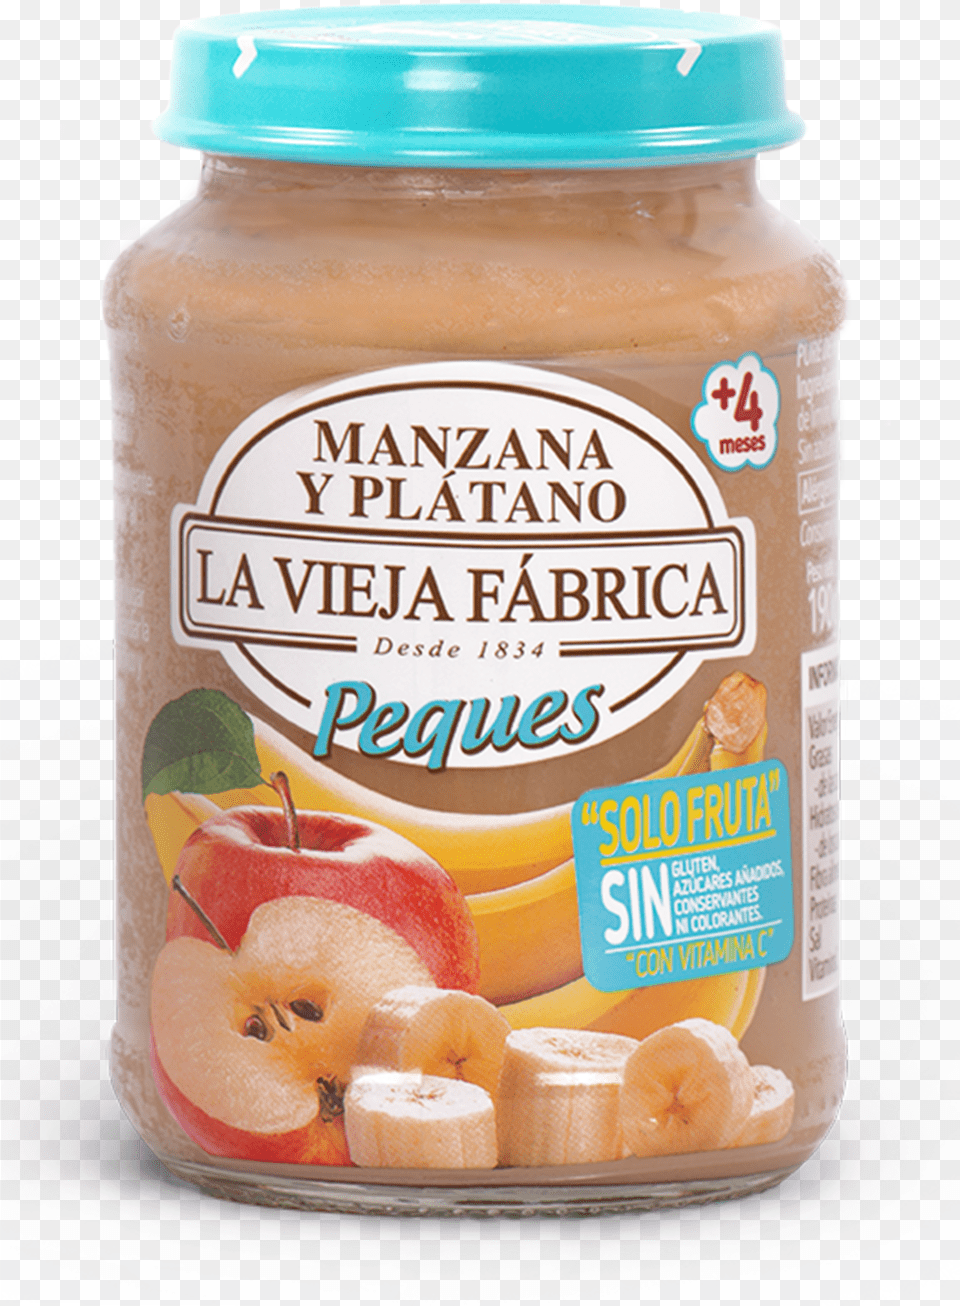 La Vieja Fabrica Pineapple Mermelada, Food, Peanut Butter, Apple, Fruit Free Png Download